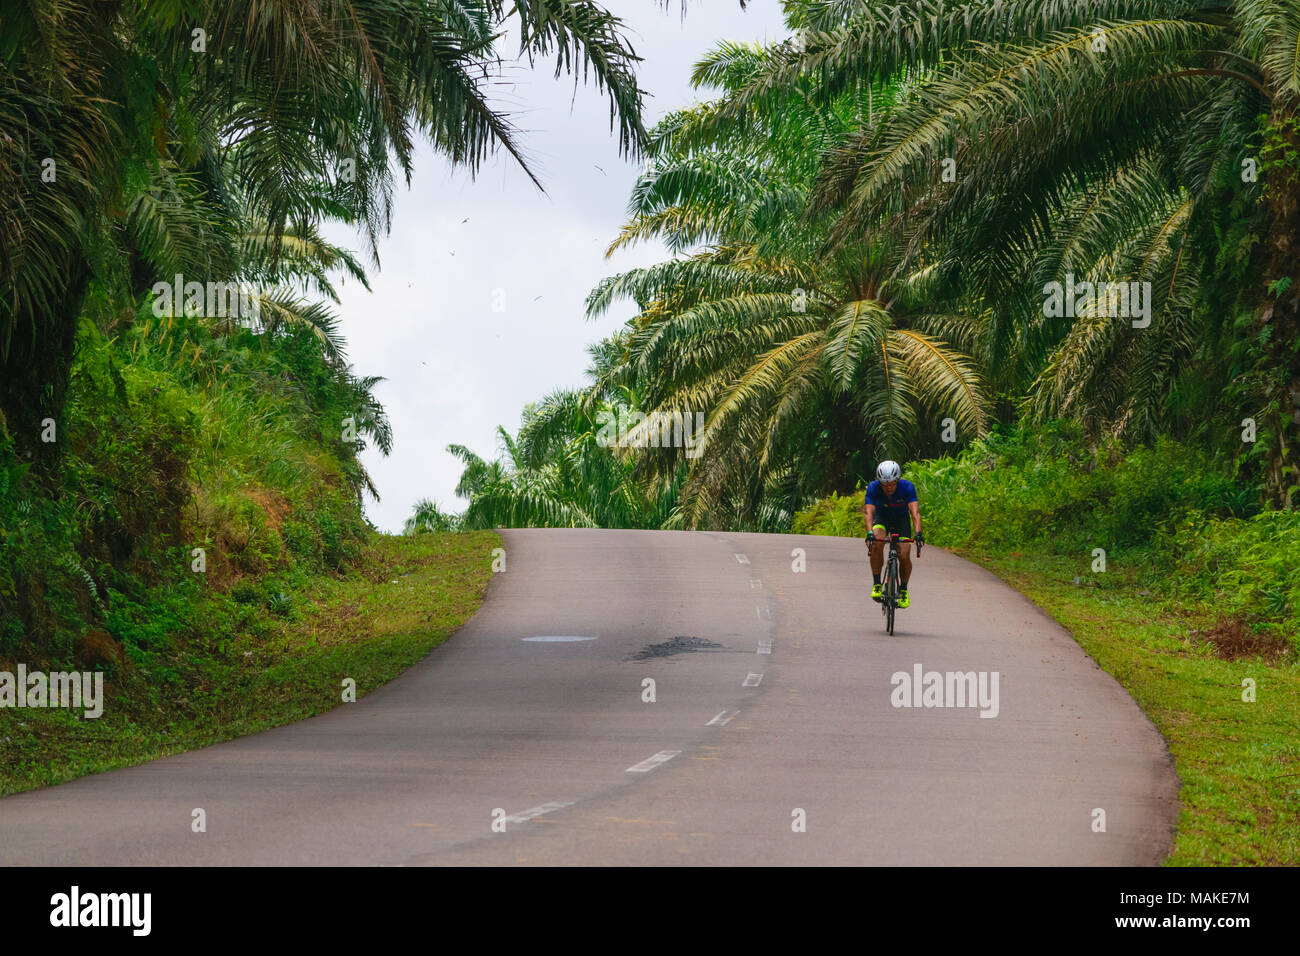 März 24, 2018 - Radfahrer Teilnehmer Tour de Bintan 2018 (144 km) Fahrt über die Plantagen und Toapaya Galang batang, Bintan Island - Indonesien Stockfoto